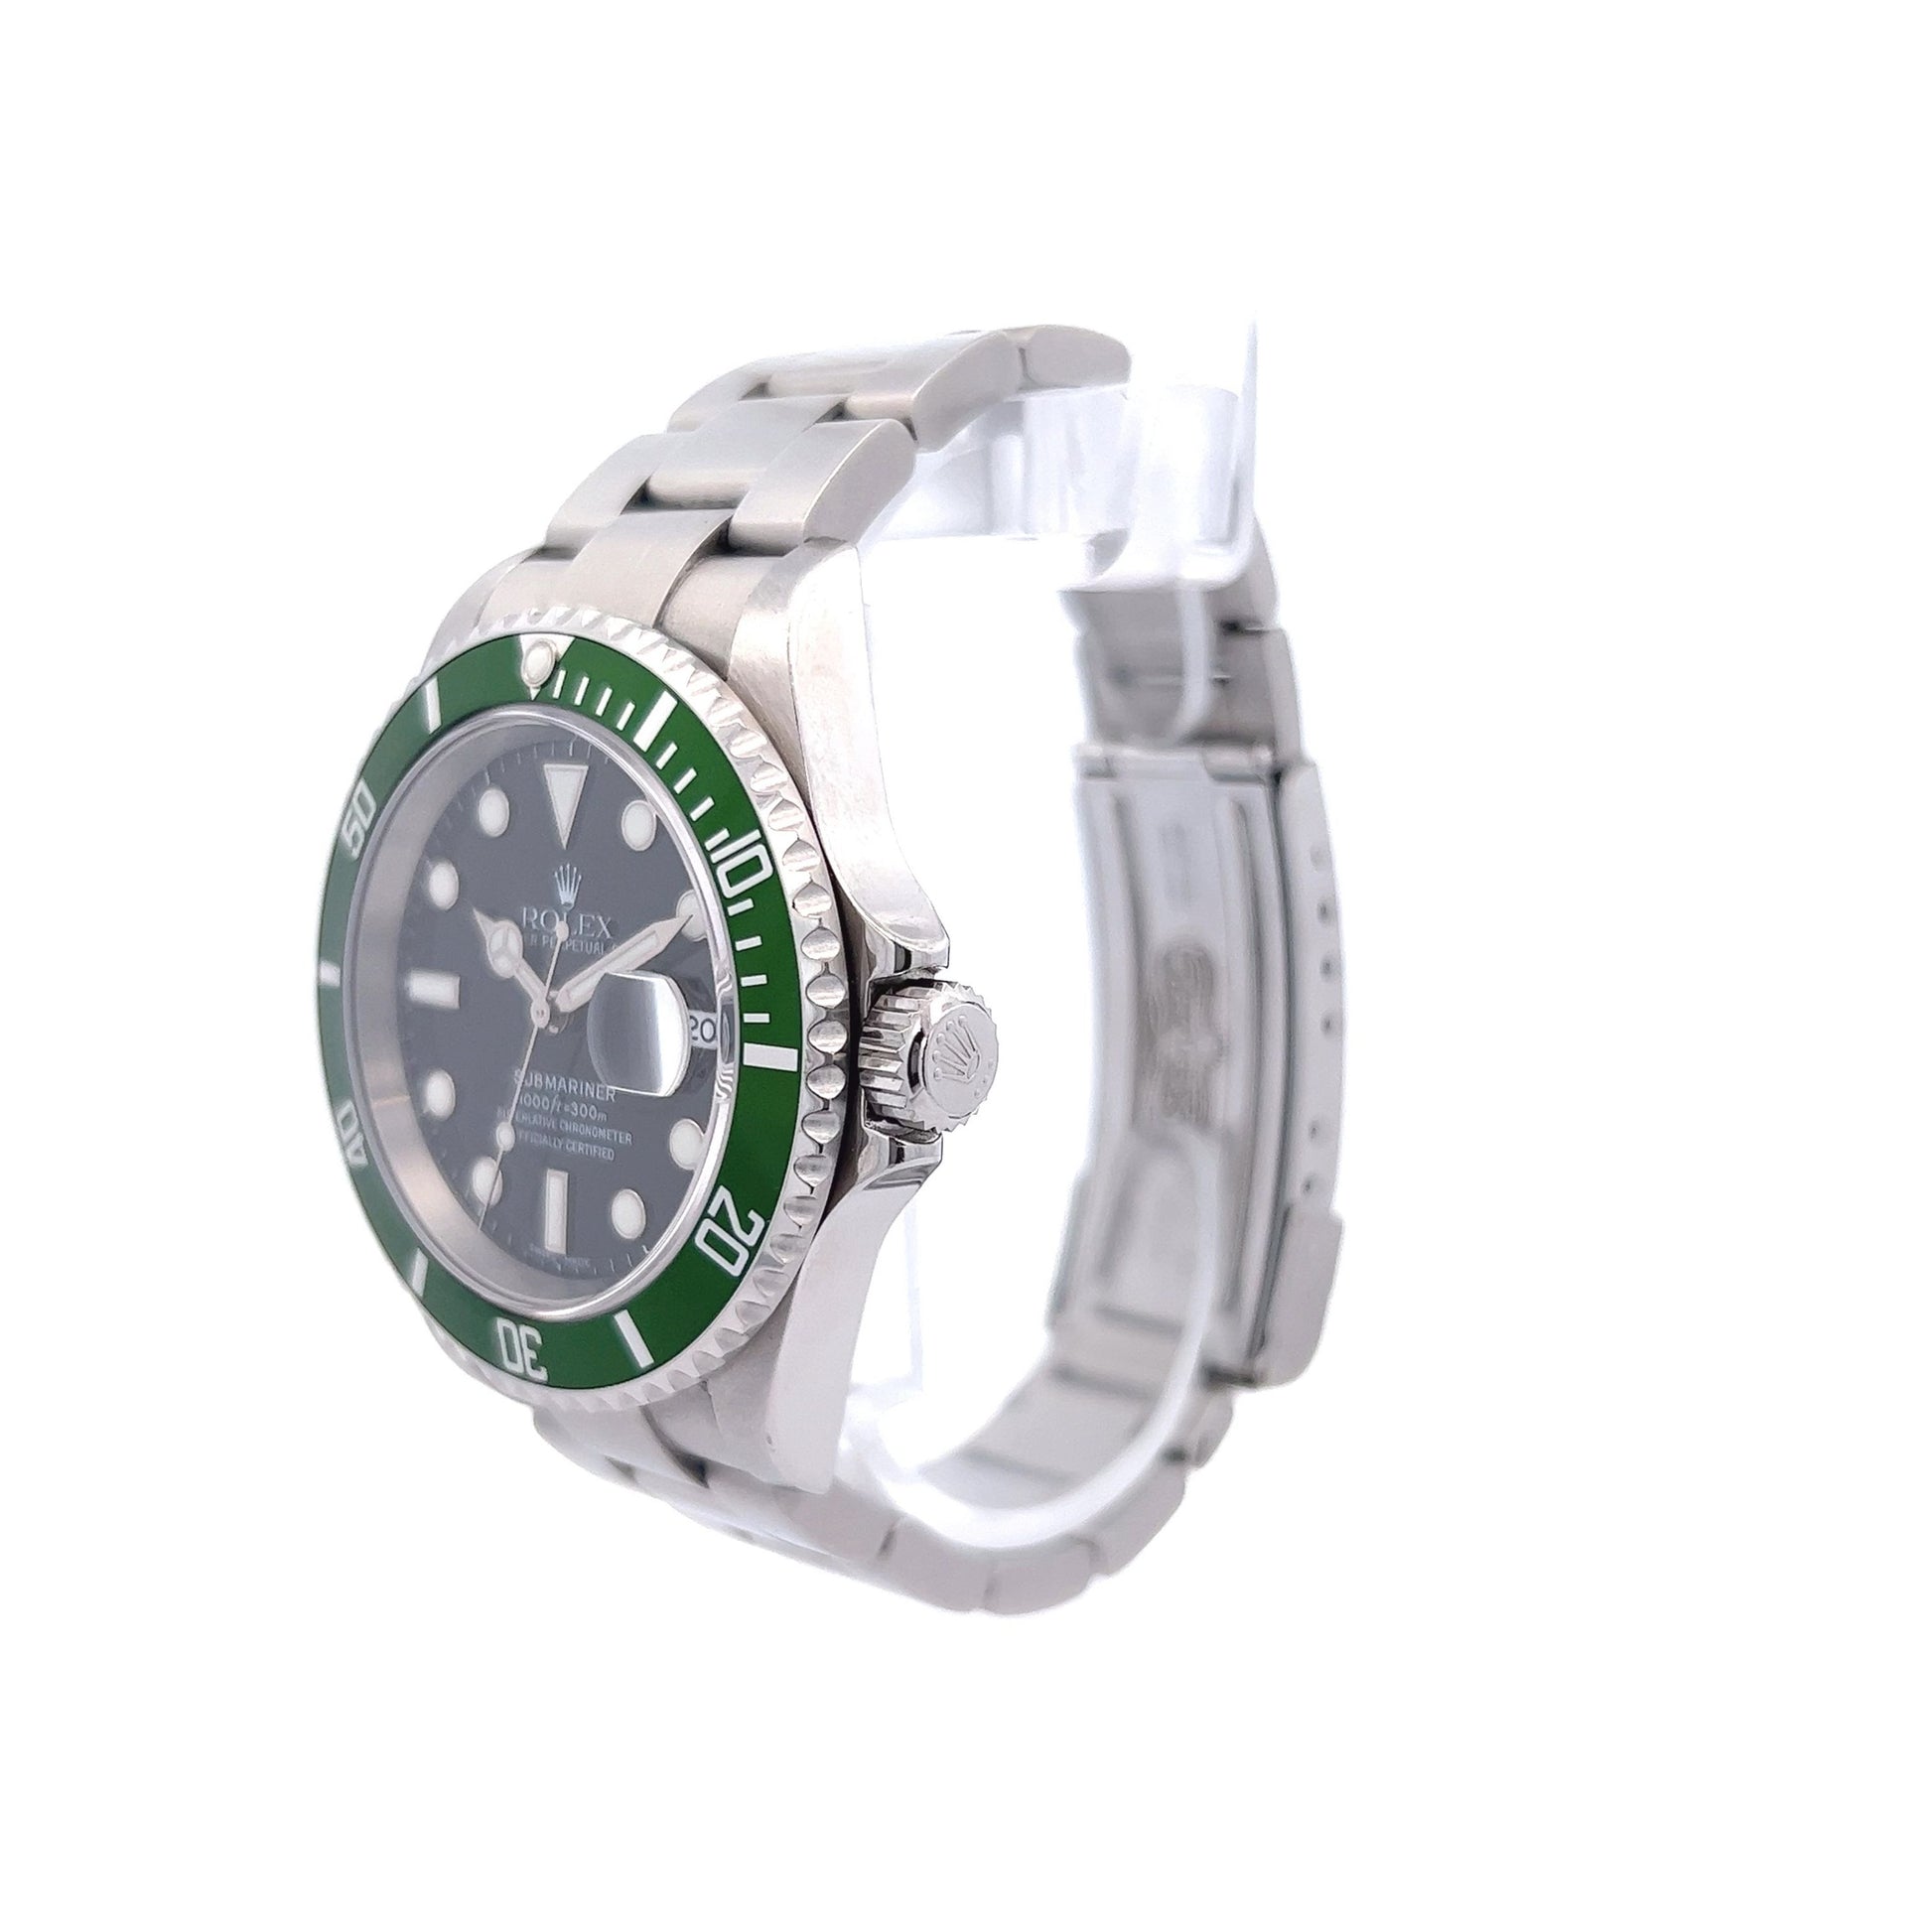 Rolex Emerald Steel Submariner Date / Stainless Watch Dial Modern